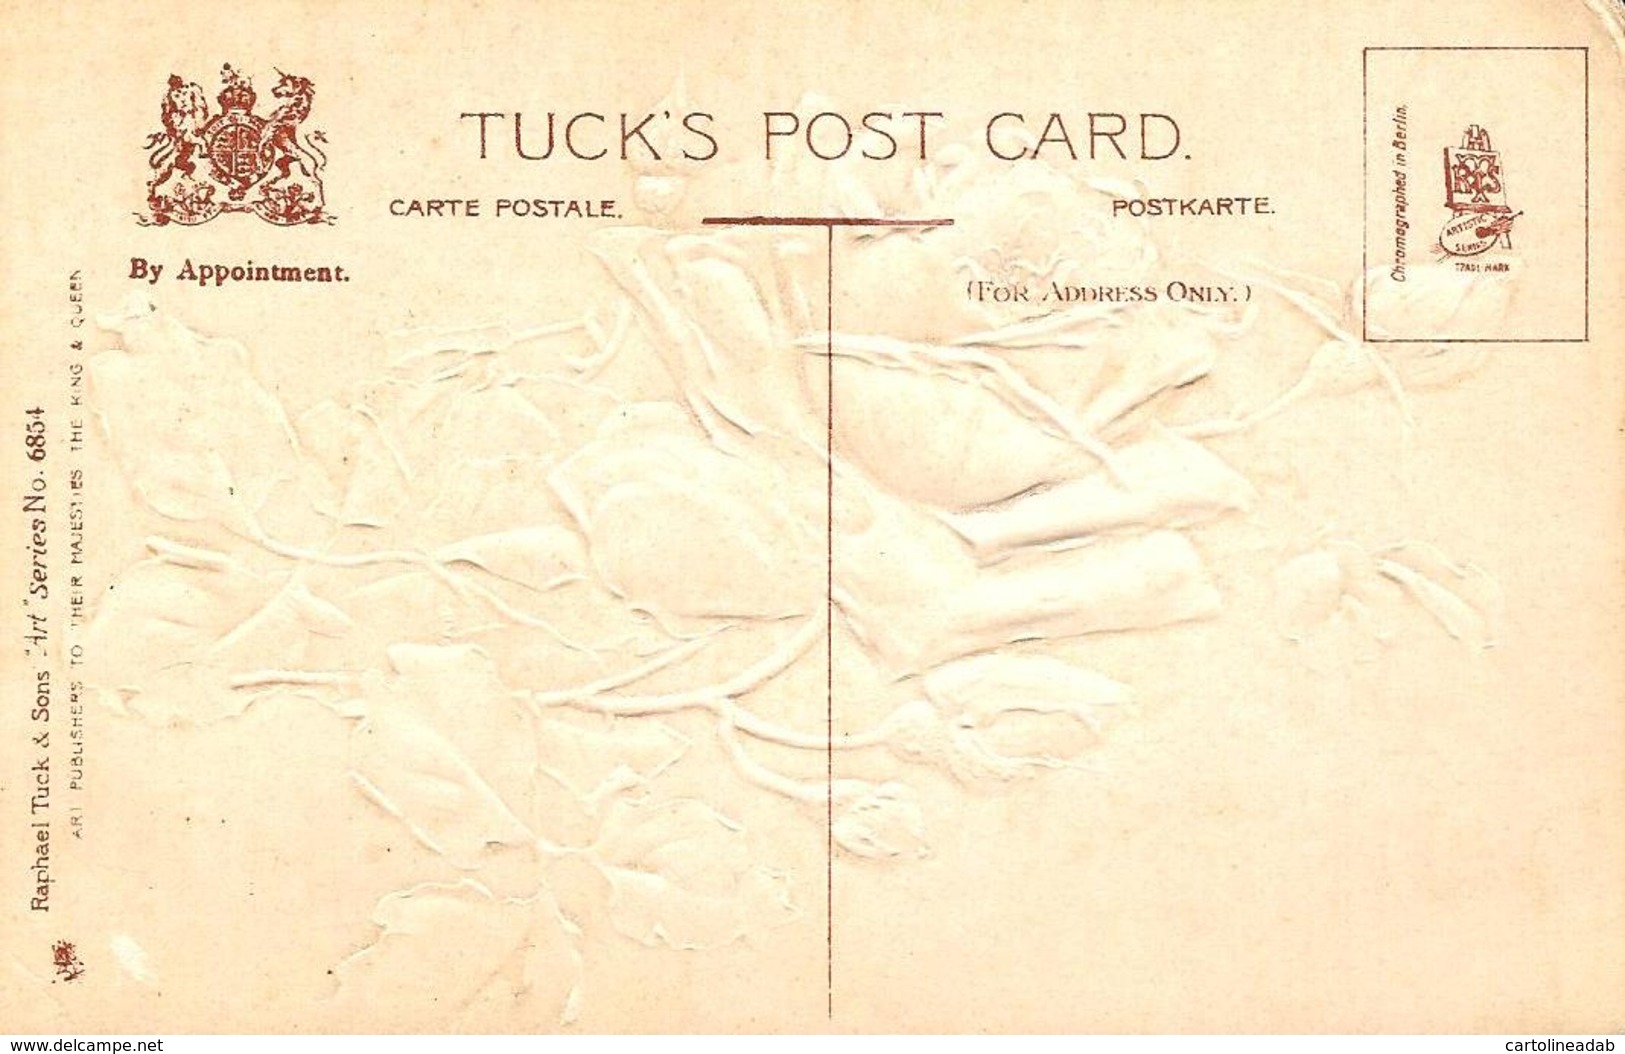 [DC7561] CPA - ROSE - TUCK'S POST CARD - ILLUSTRATORI - CATHARINA KLEIN - IN RILIEVO - Non Viaggiata - Old Postcard - Klein, Catharina